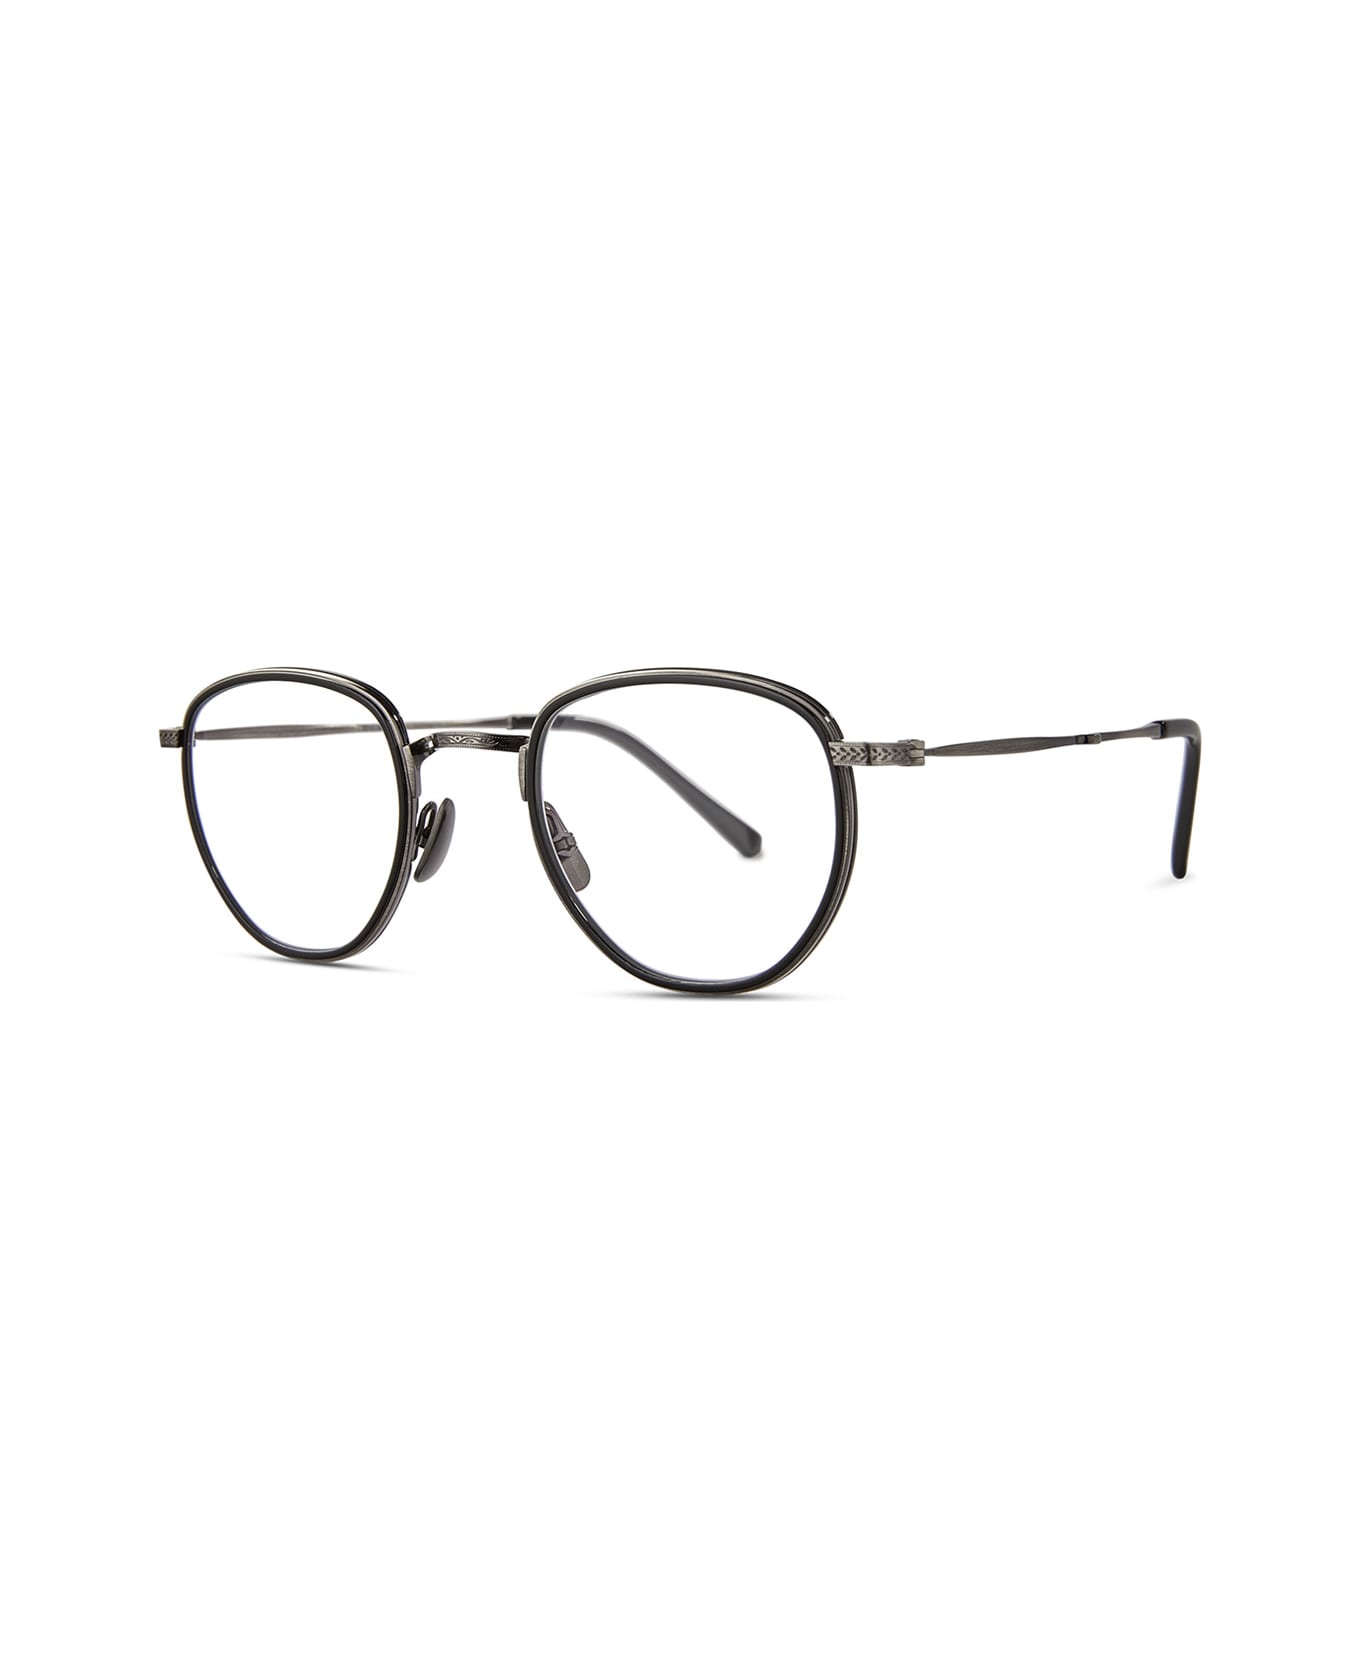 Mr. Leight Roku C Black-pewter Glasses - Black-Pewter アイウェア